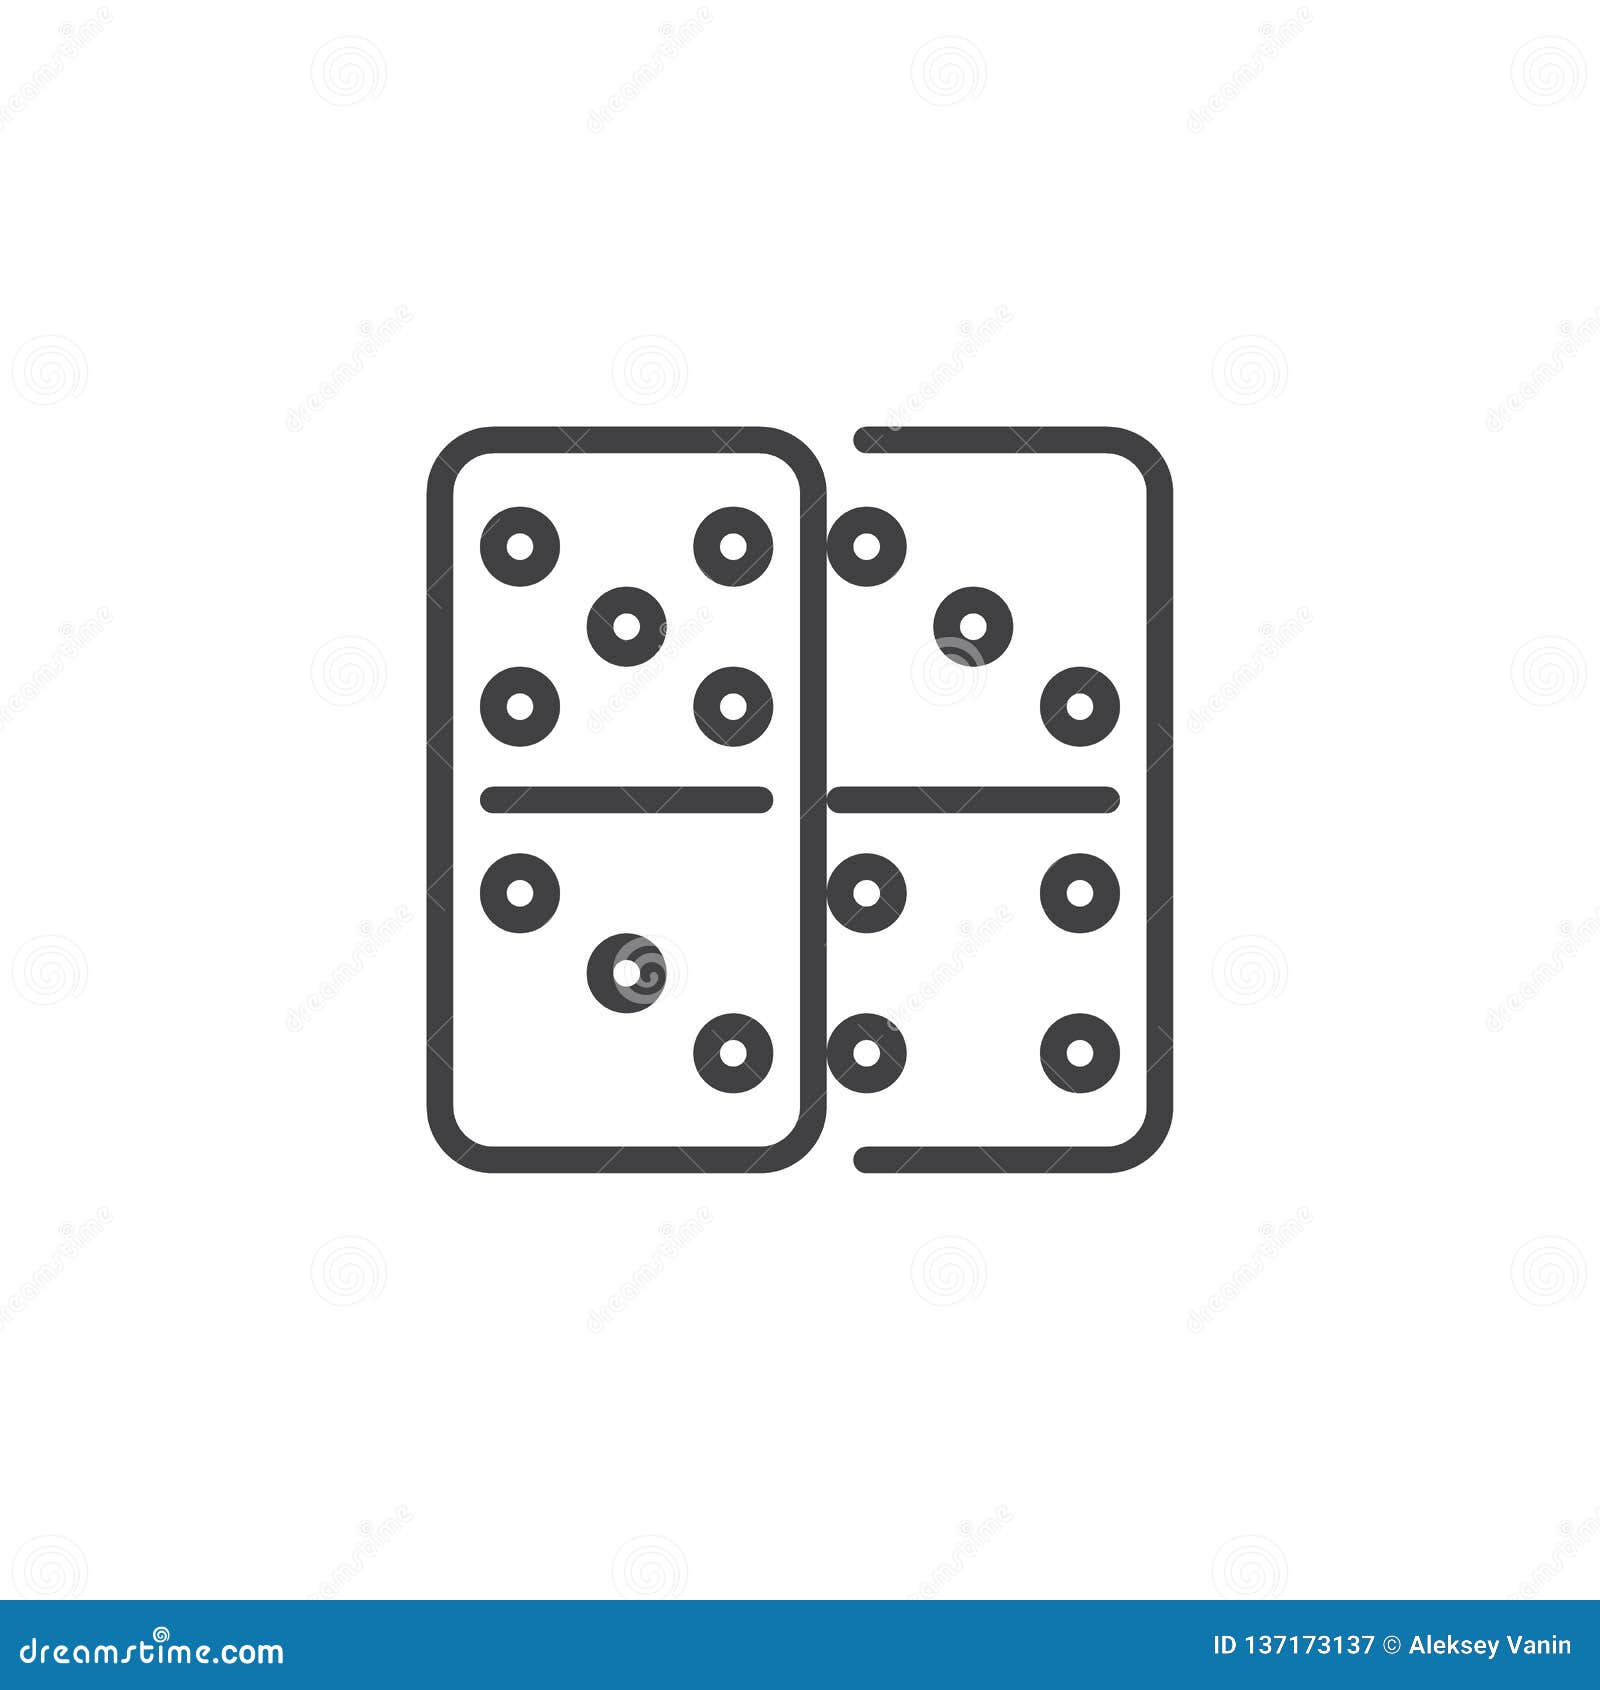 domino icon, block icon, game icon, dominoes icon, gaming icon